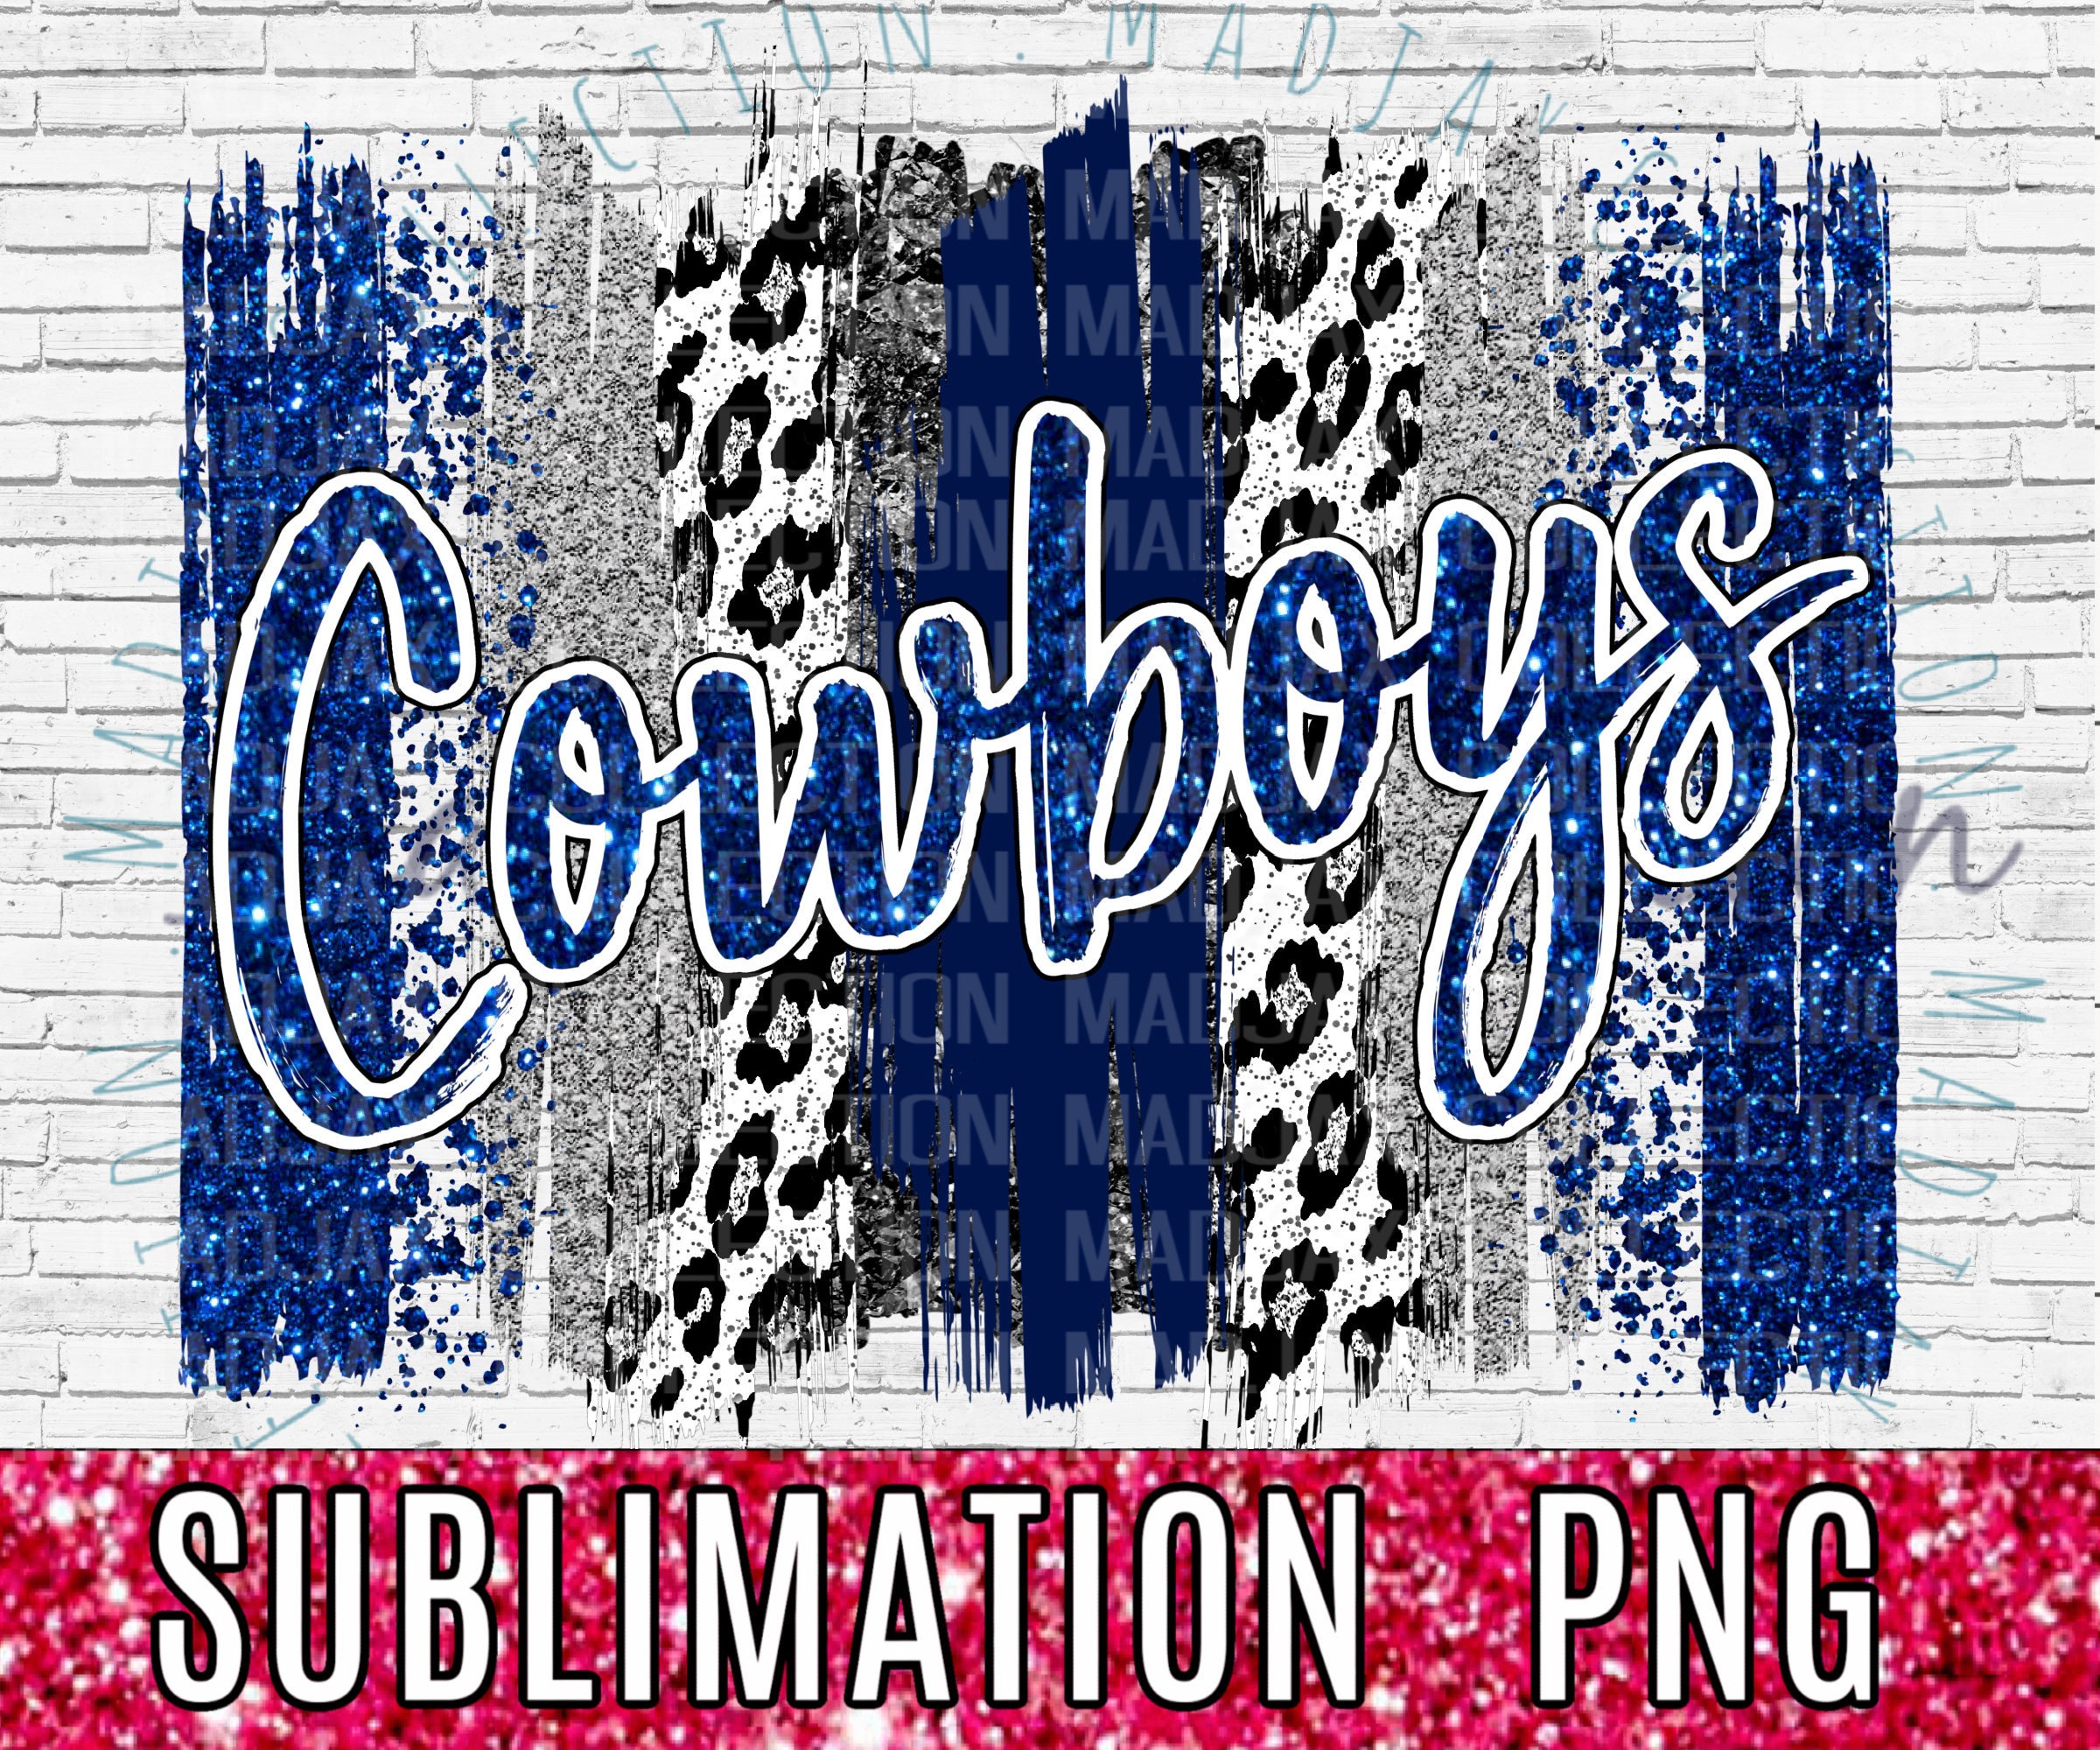 Dallas Cowboys Football 8.5 x 11 Unique Custom Stencil FAST FREE SHIPPING